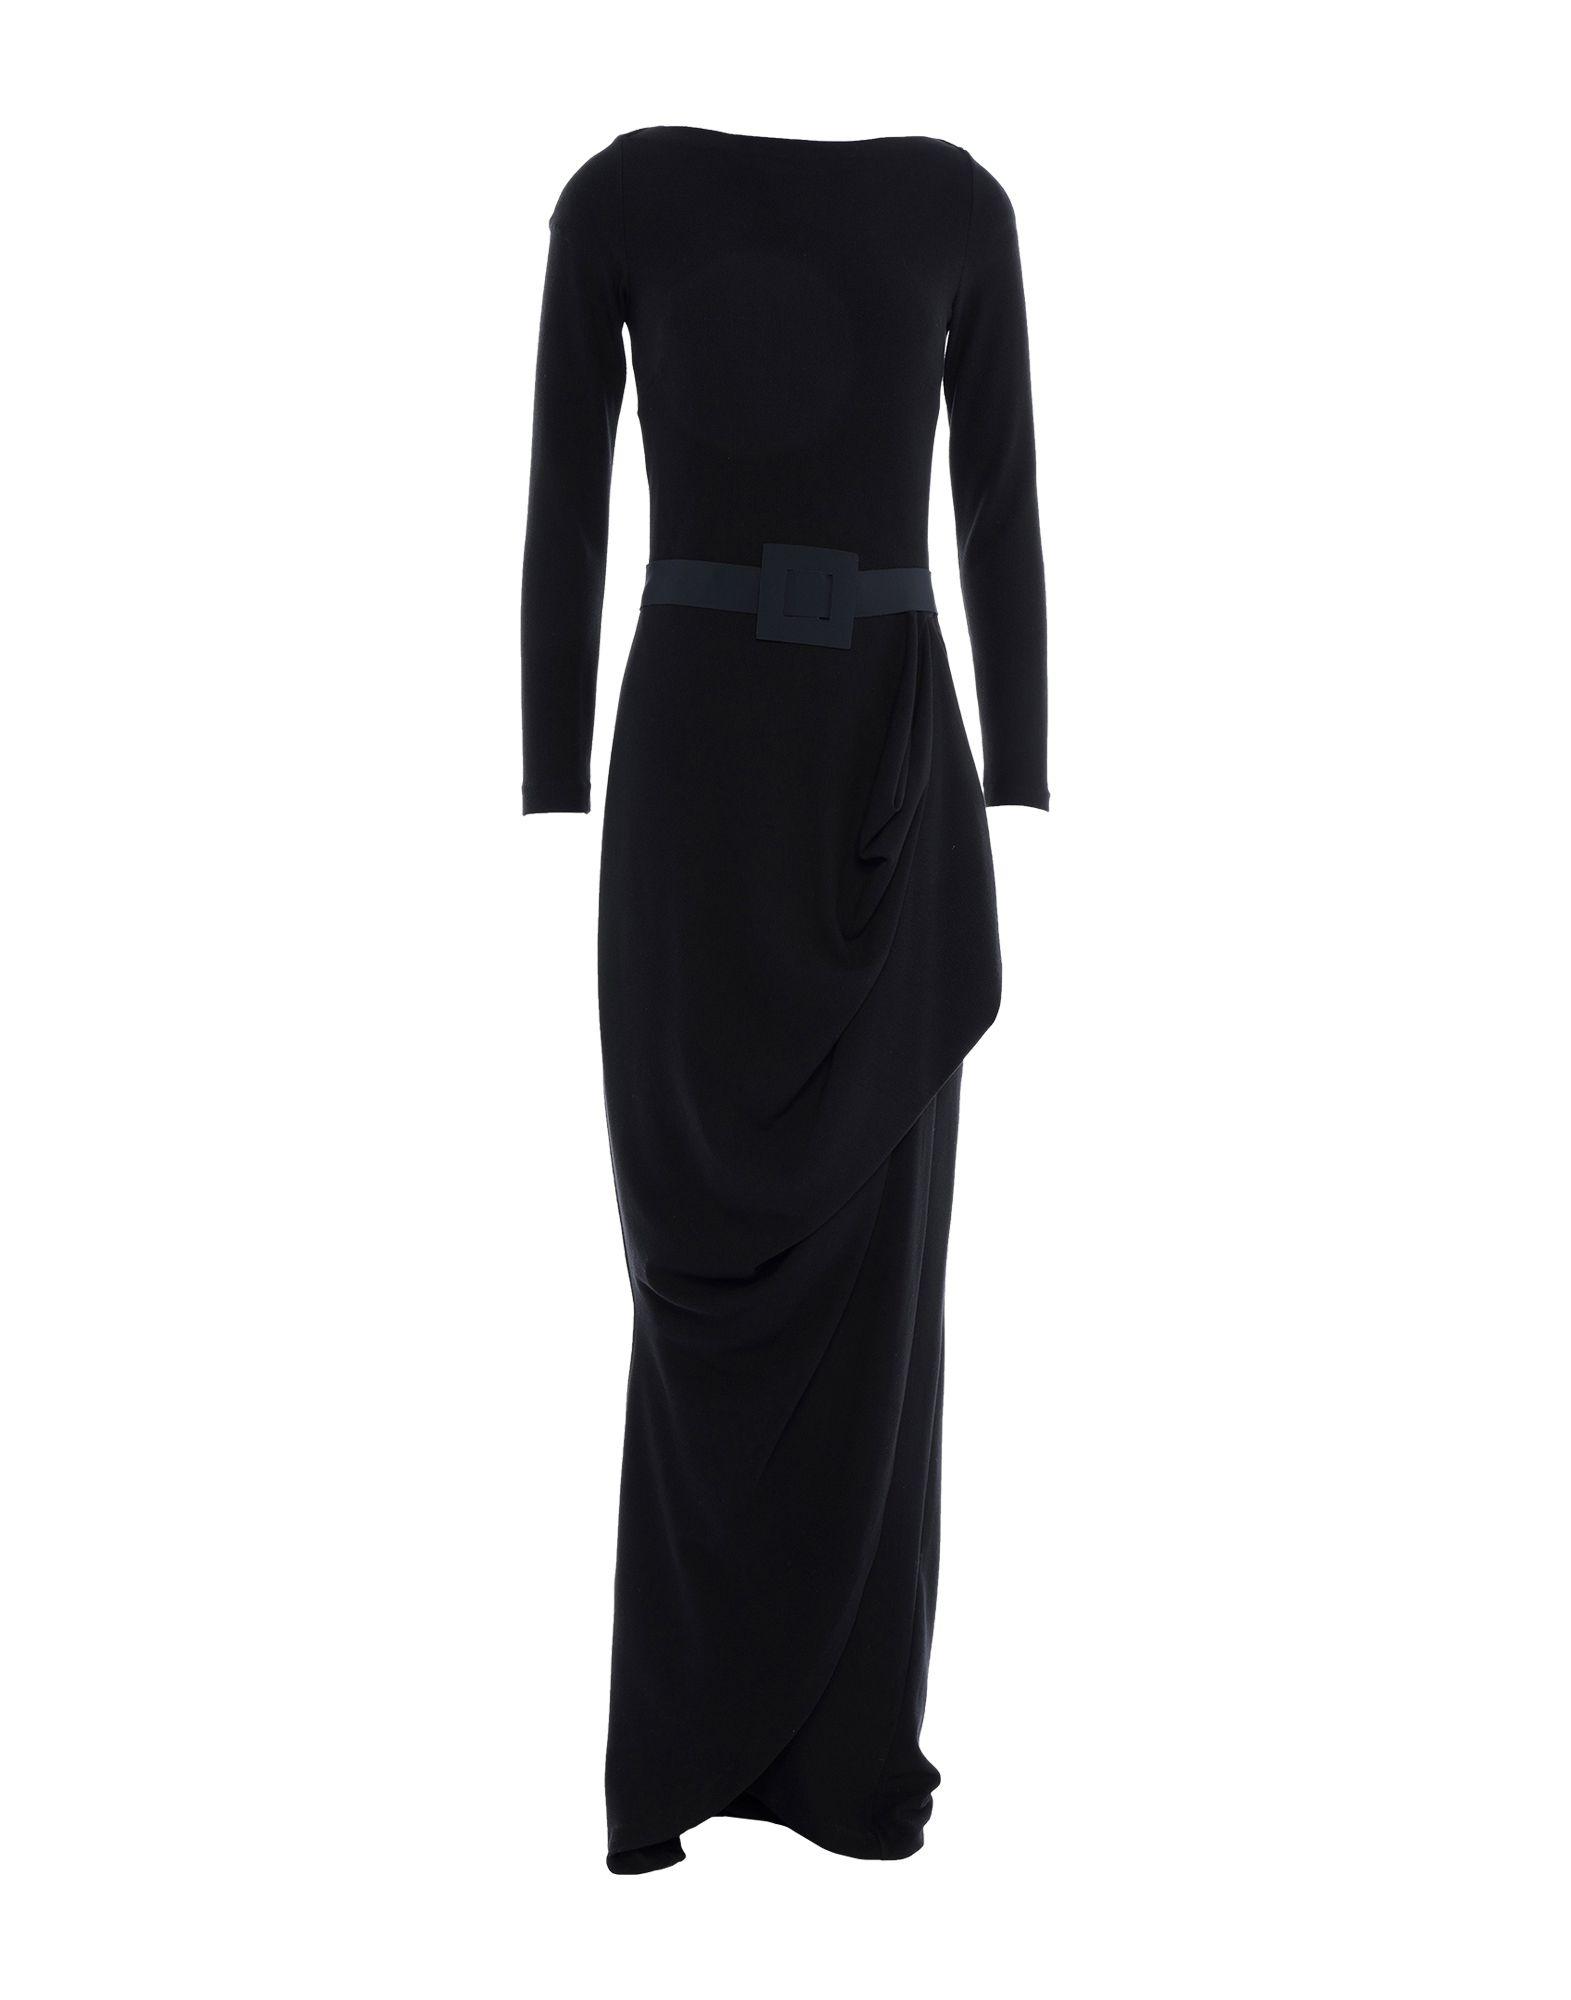 La Petite Robe Di Chiara Boni Synthetic Long Dress in Black - Lyst